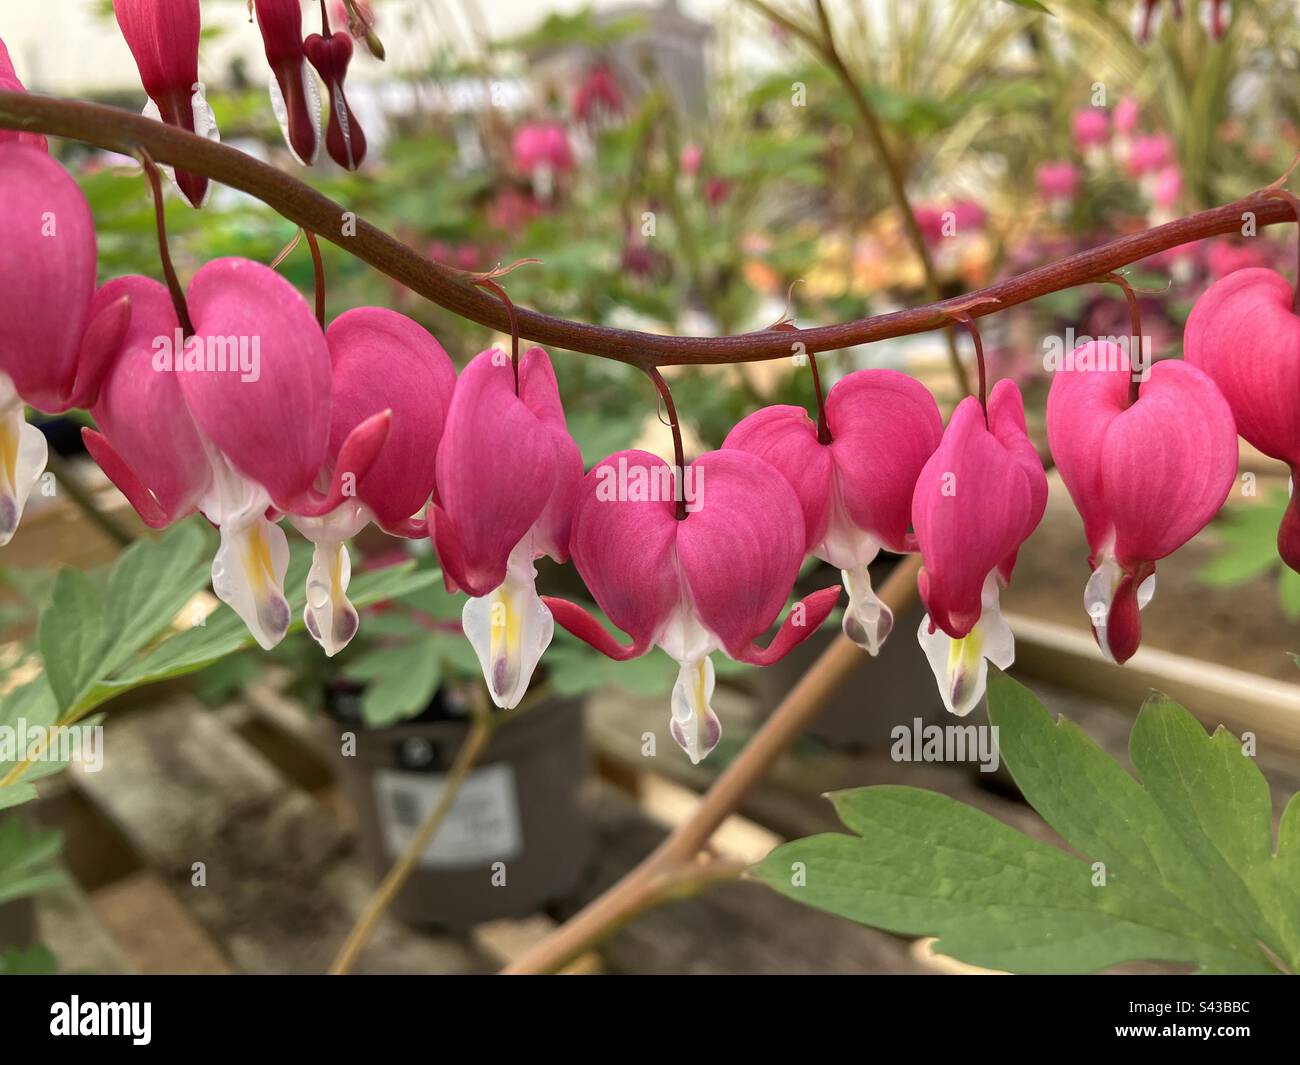 Bleeding heart, also known as dicentra spectabis, in flower in a garden centre Stock Photo